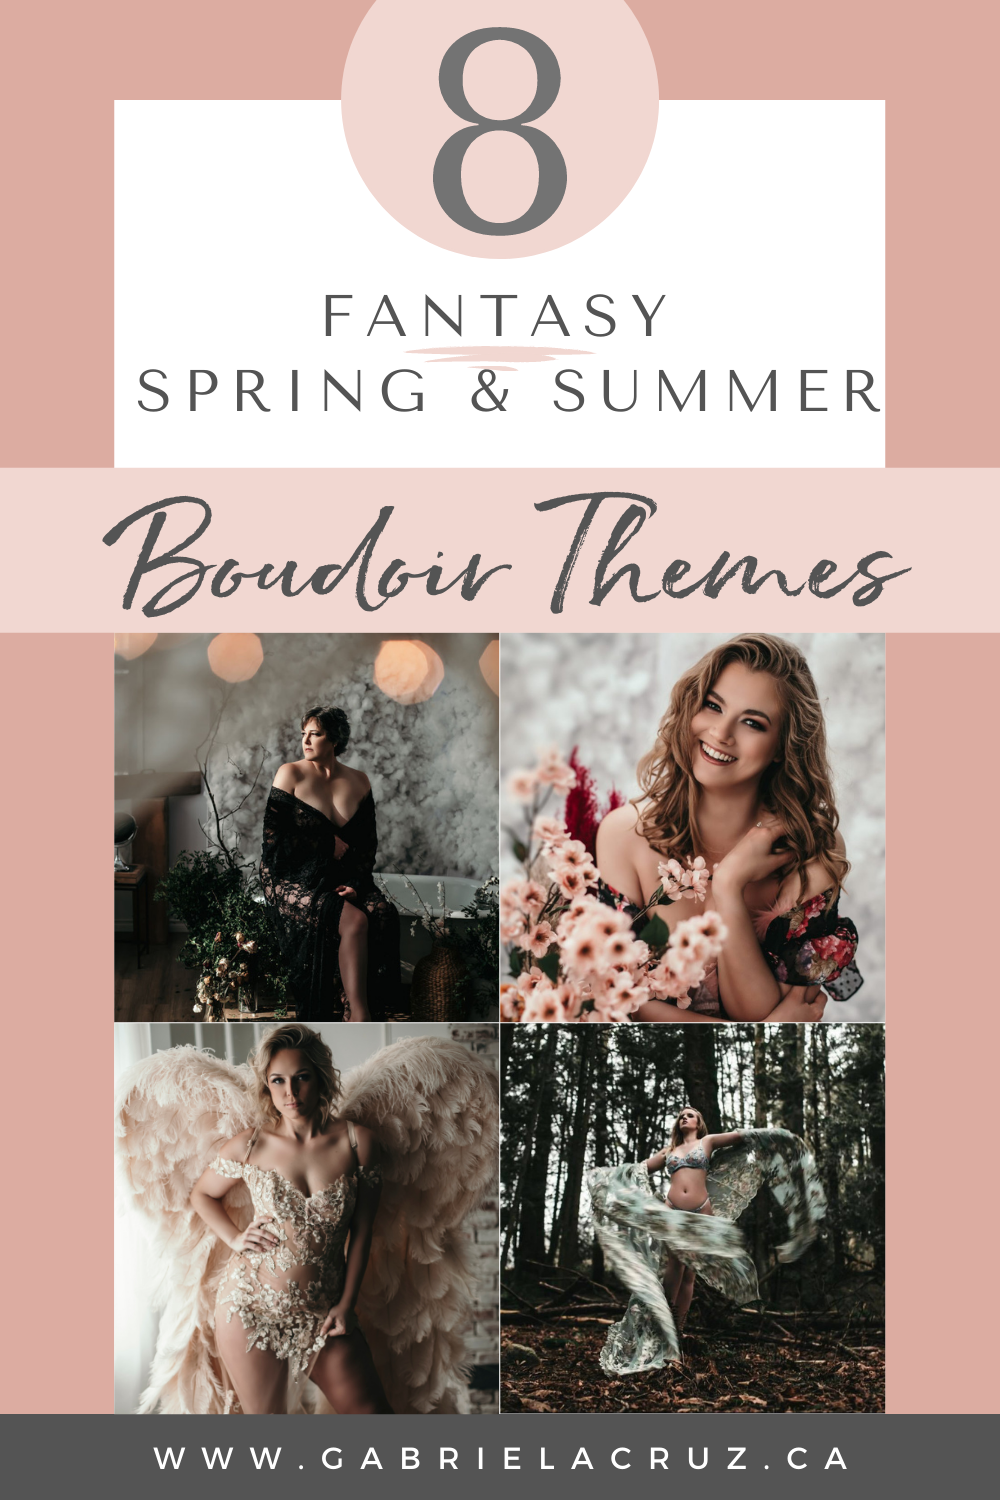 8 fantasy spring & summer boudoir photoshoot themes from Edmonton and Vancouver based boudoir studio Gabriela Cruz Photography